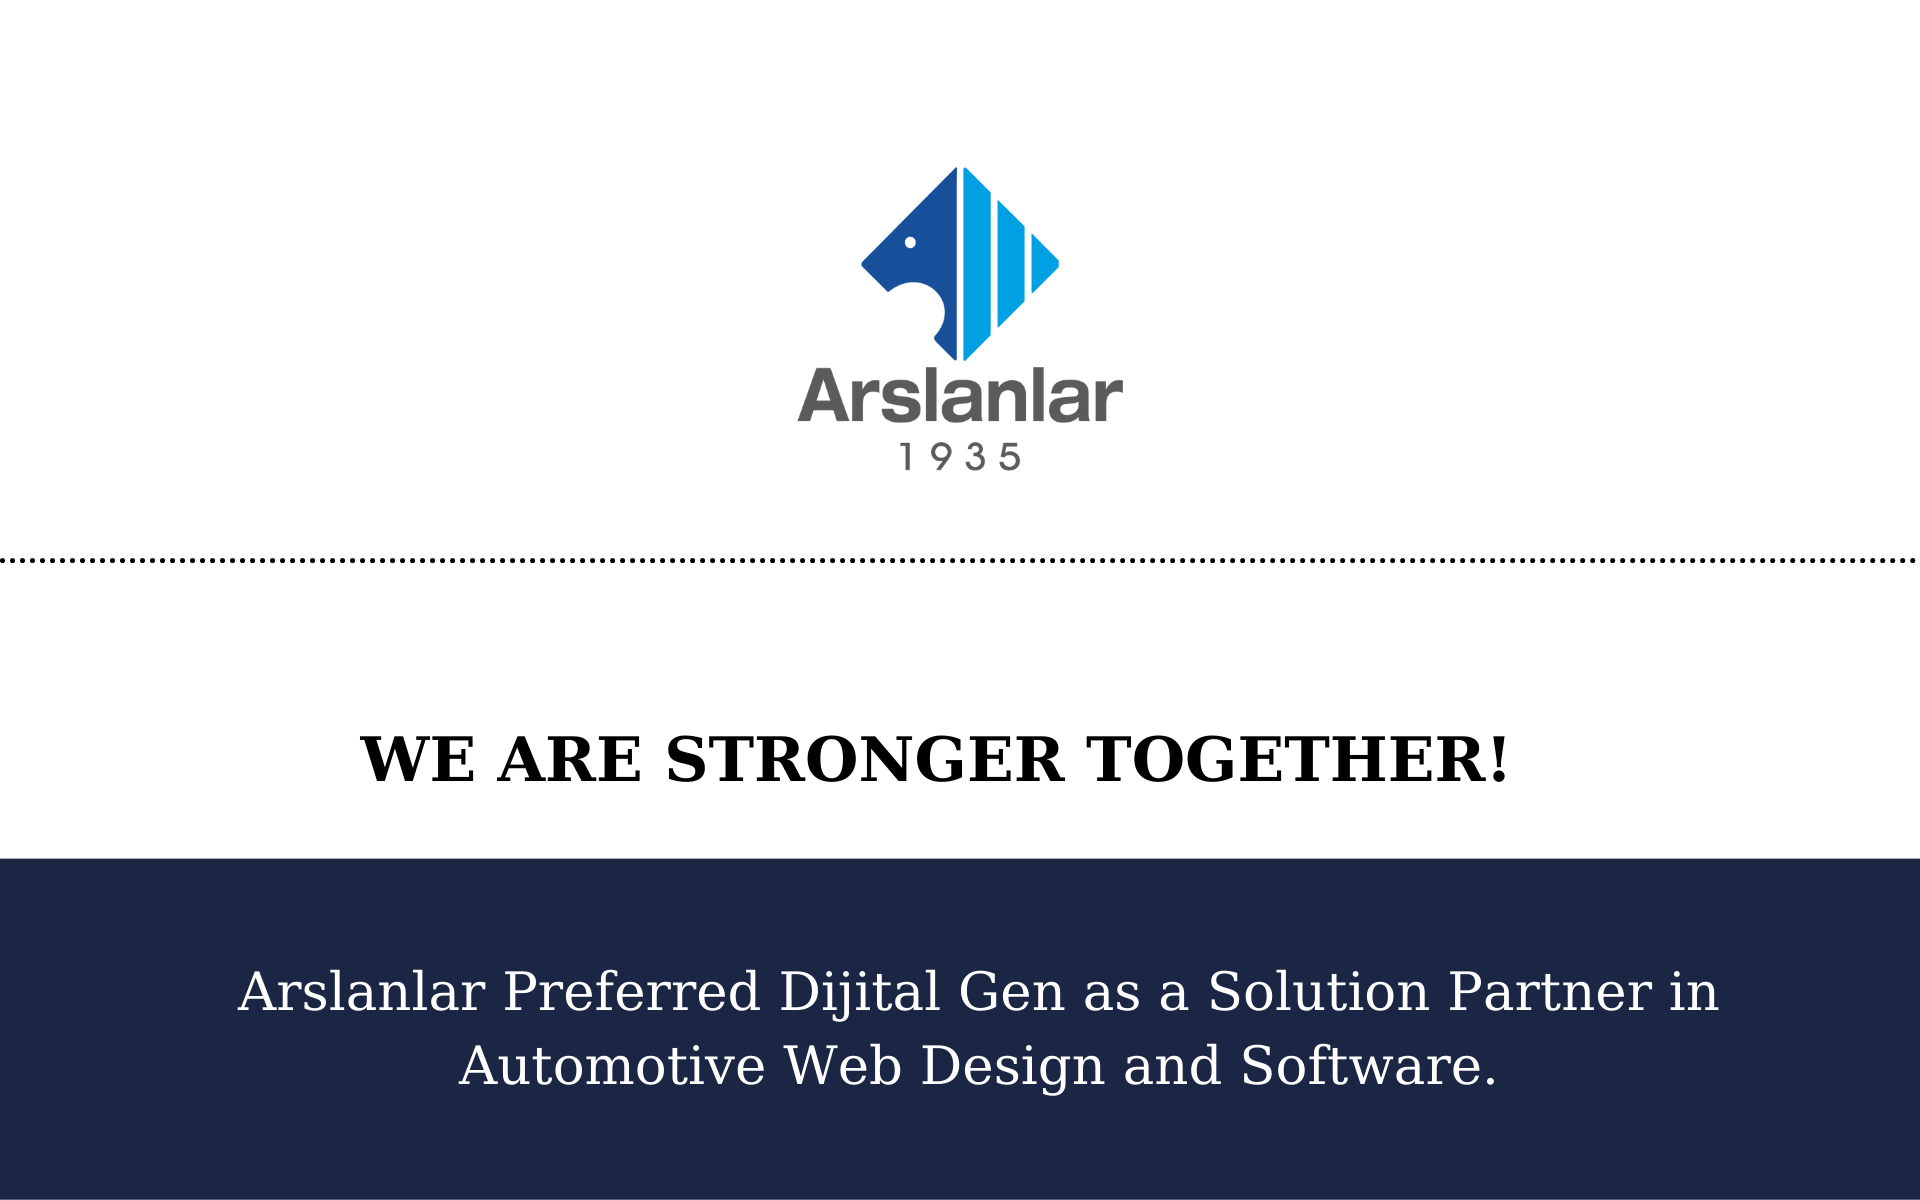 Arslanlar has Preferred Dijital Gen as a Solution Partner in Automotive Web Design and Software! 